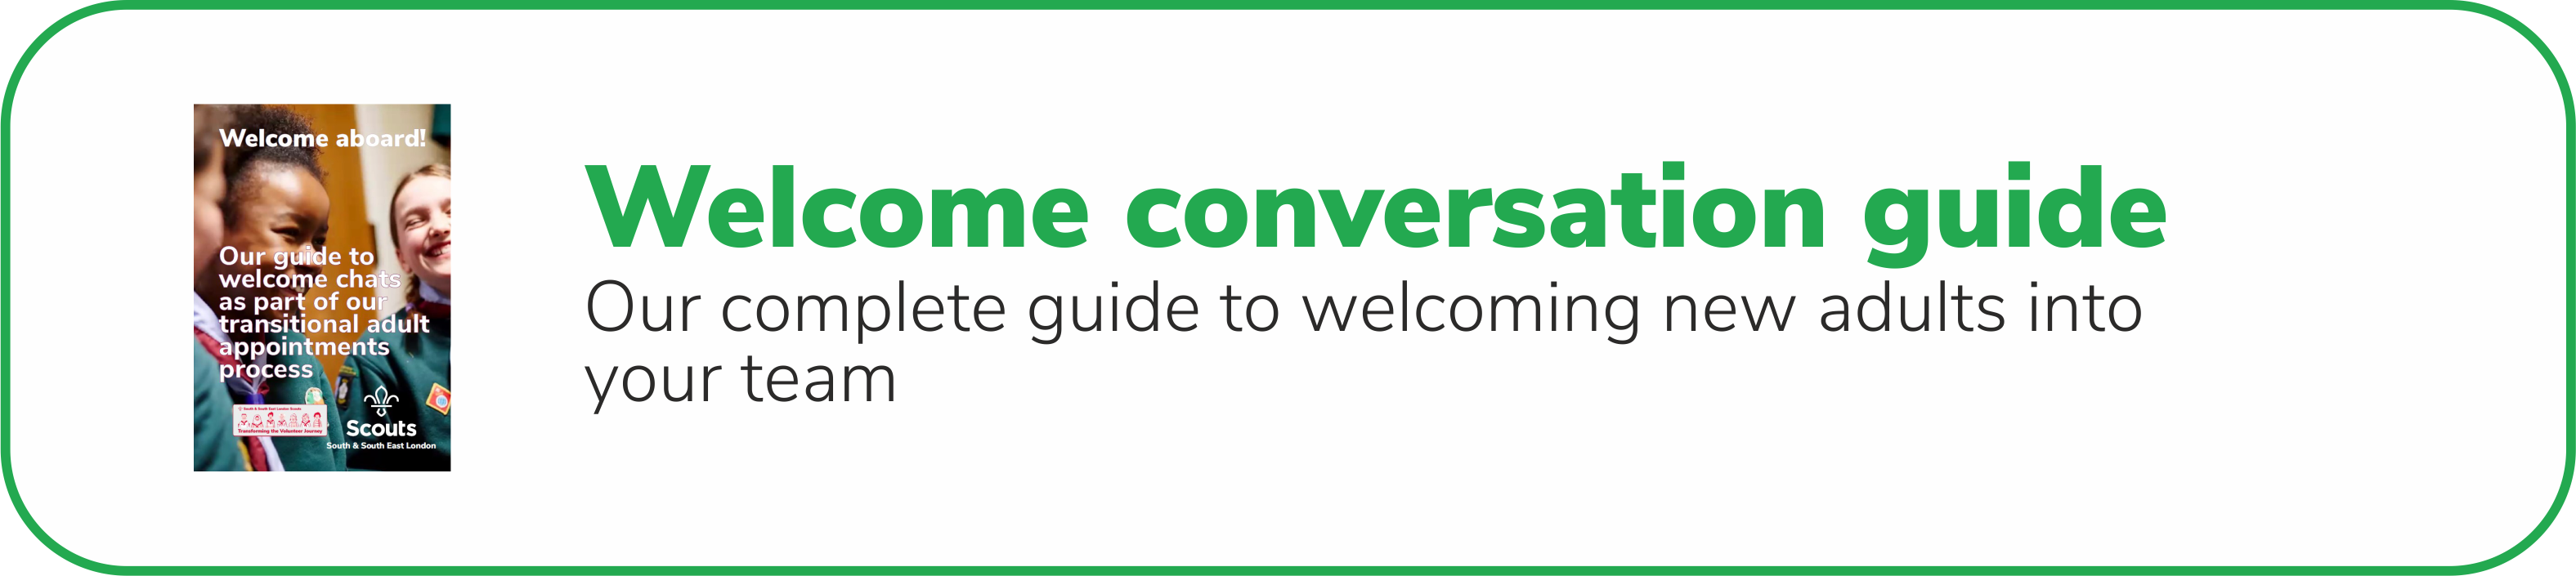 Conversation Guide